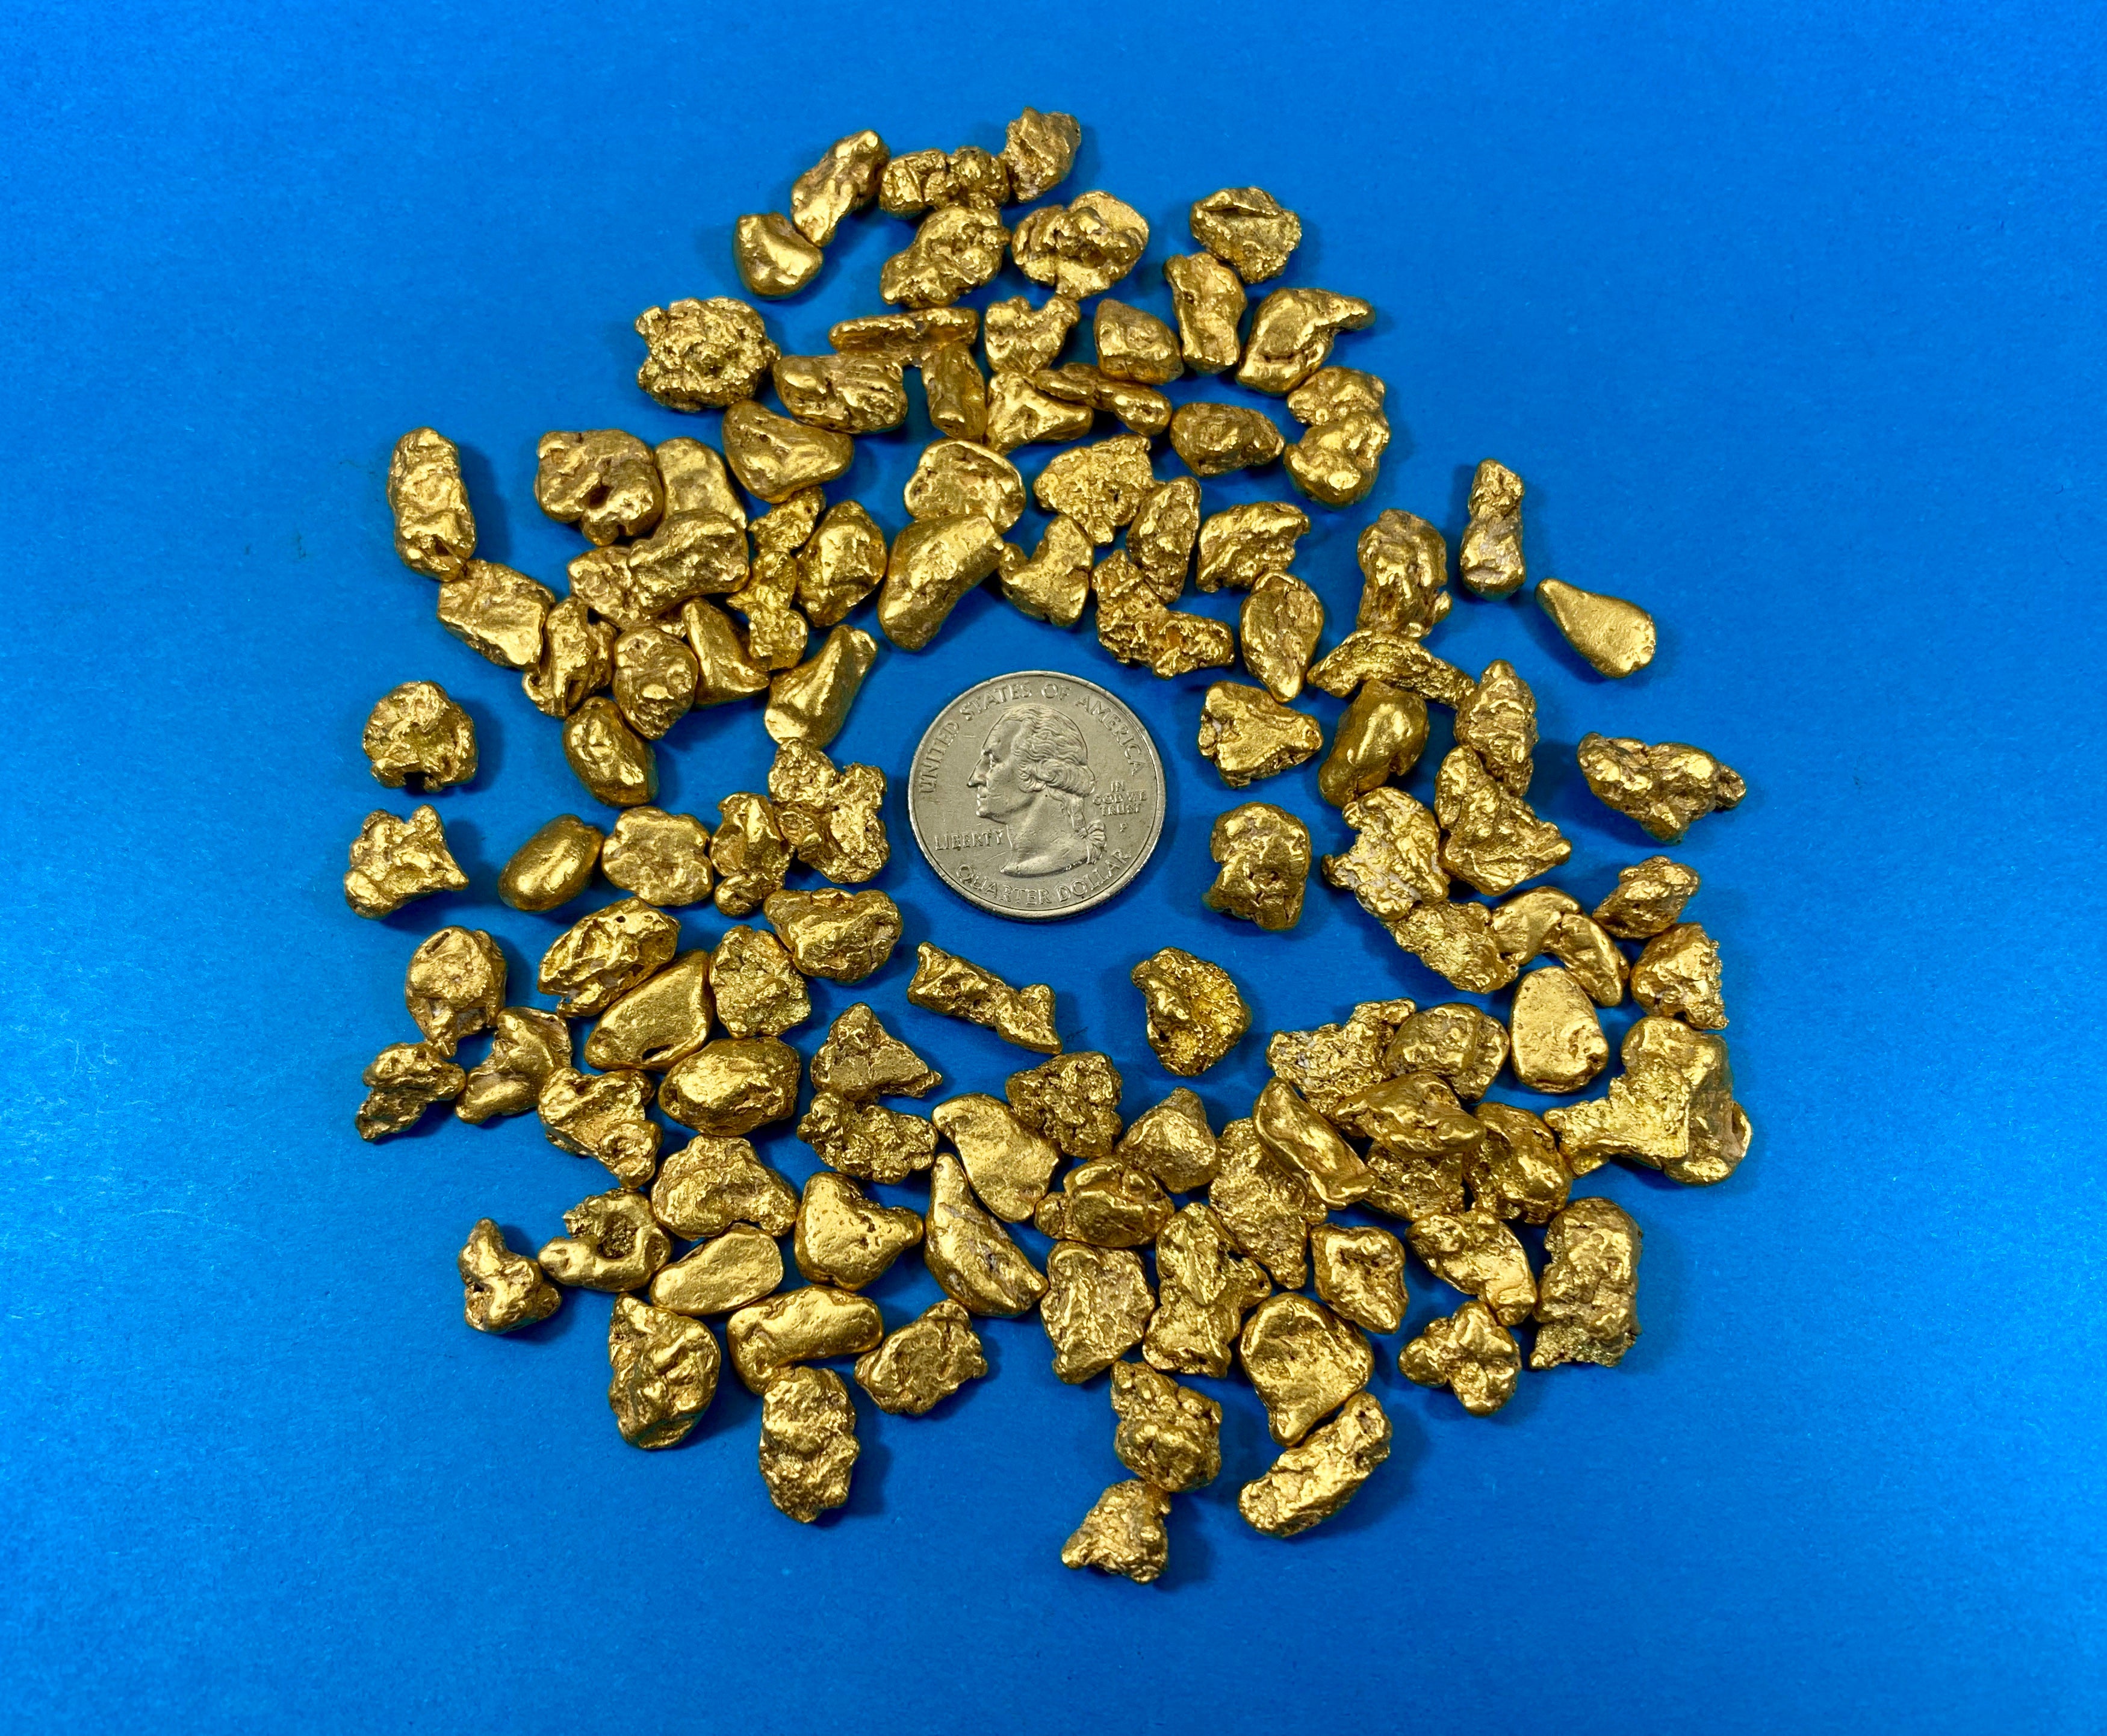 Alaskan BC Natural Gold Nugget 311.00 Gram lot of 2 to 5 gram Nuggets Genuine 10 Troy Oz B&C